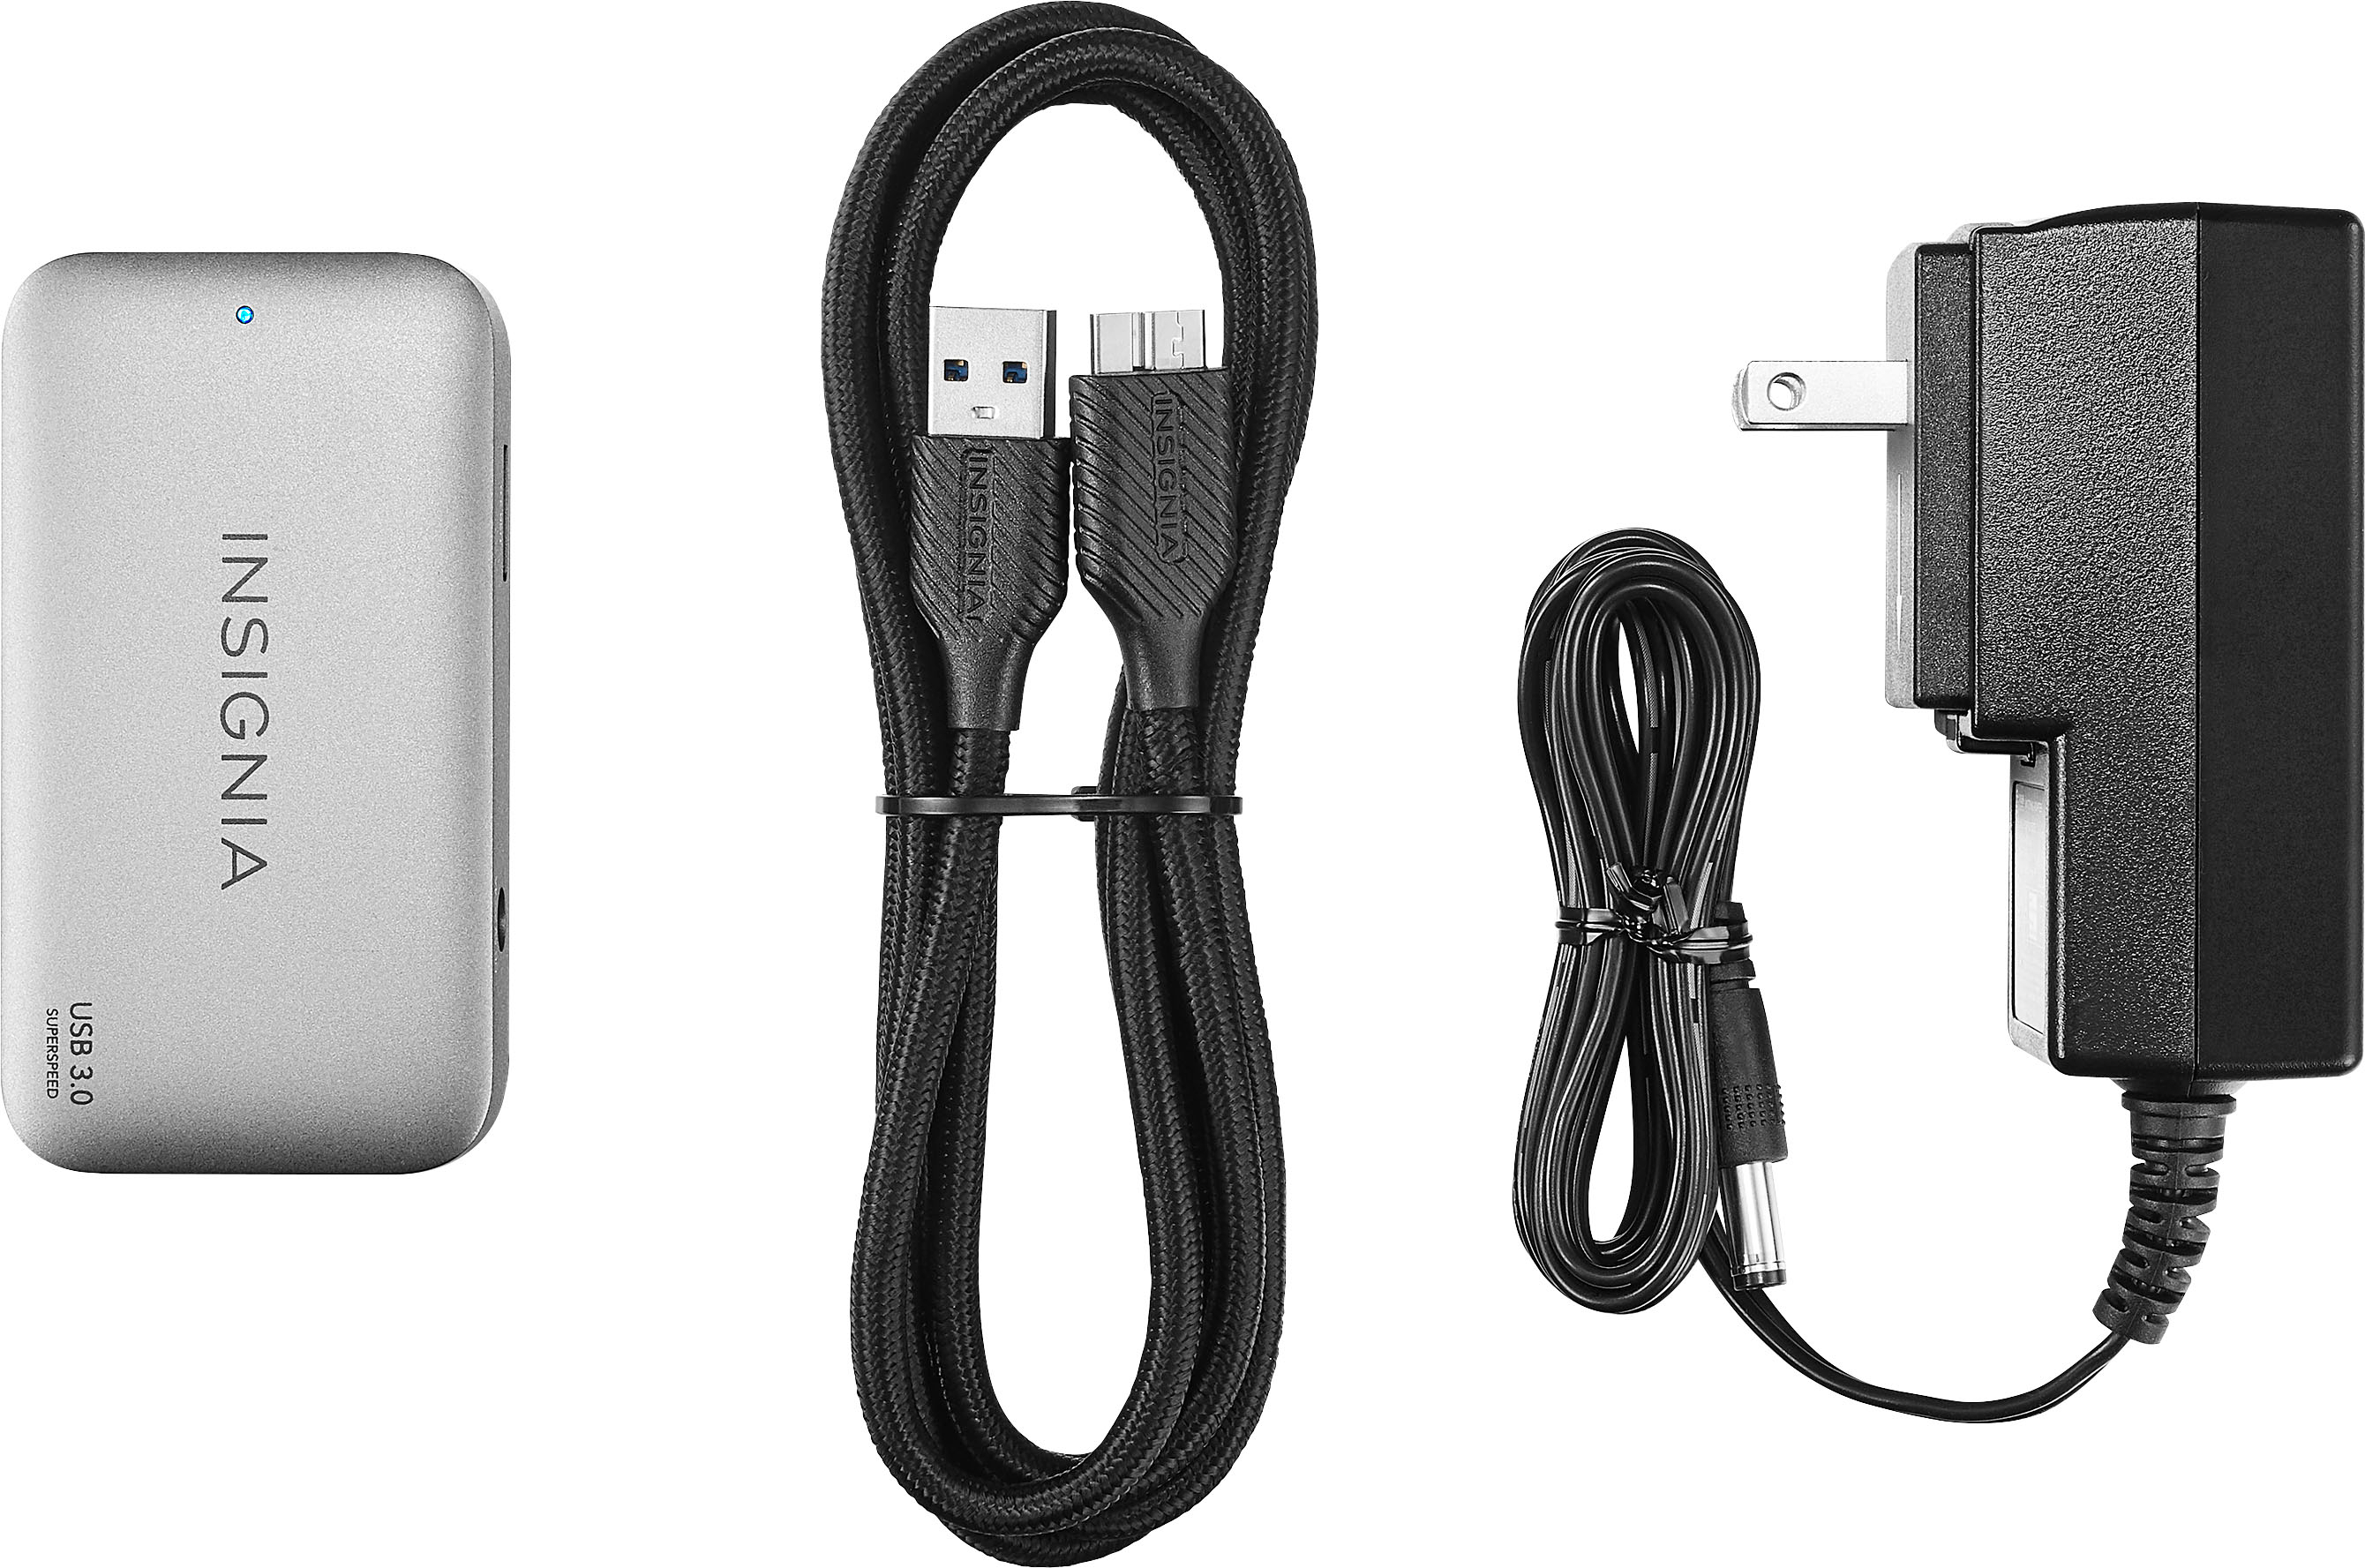 Insignia - 4-Port USB 3.0 Powered Hub - Metallic Gray